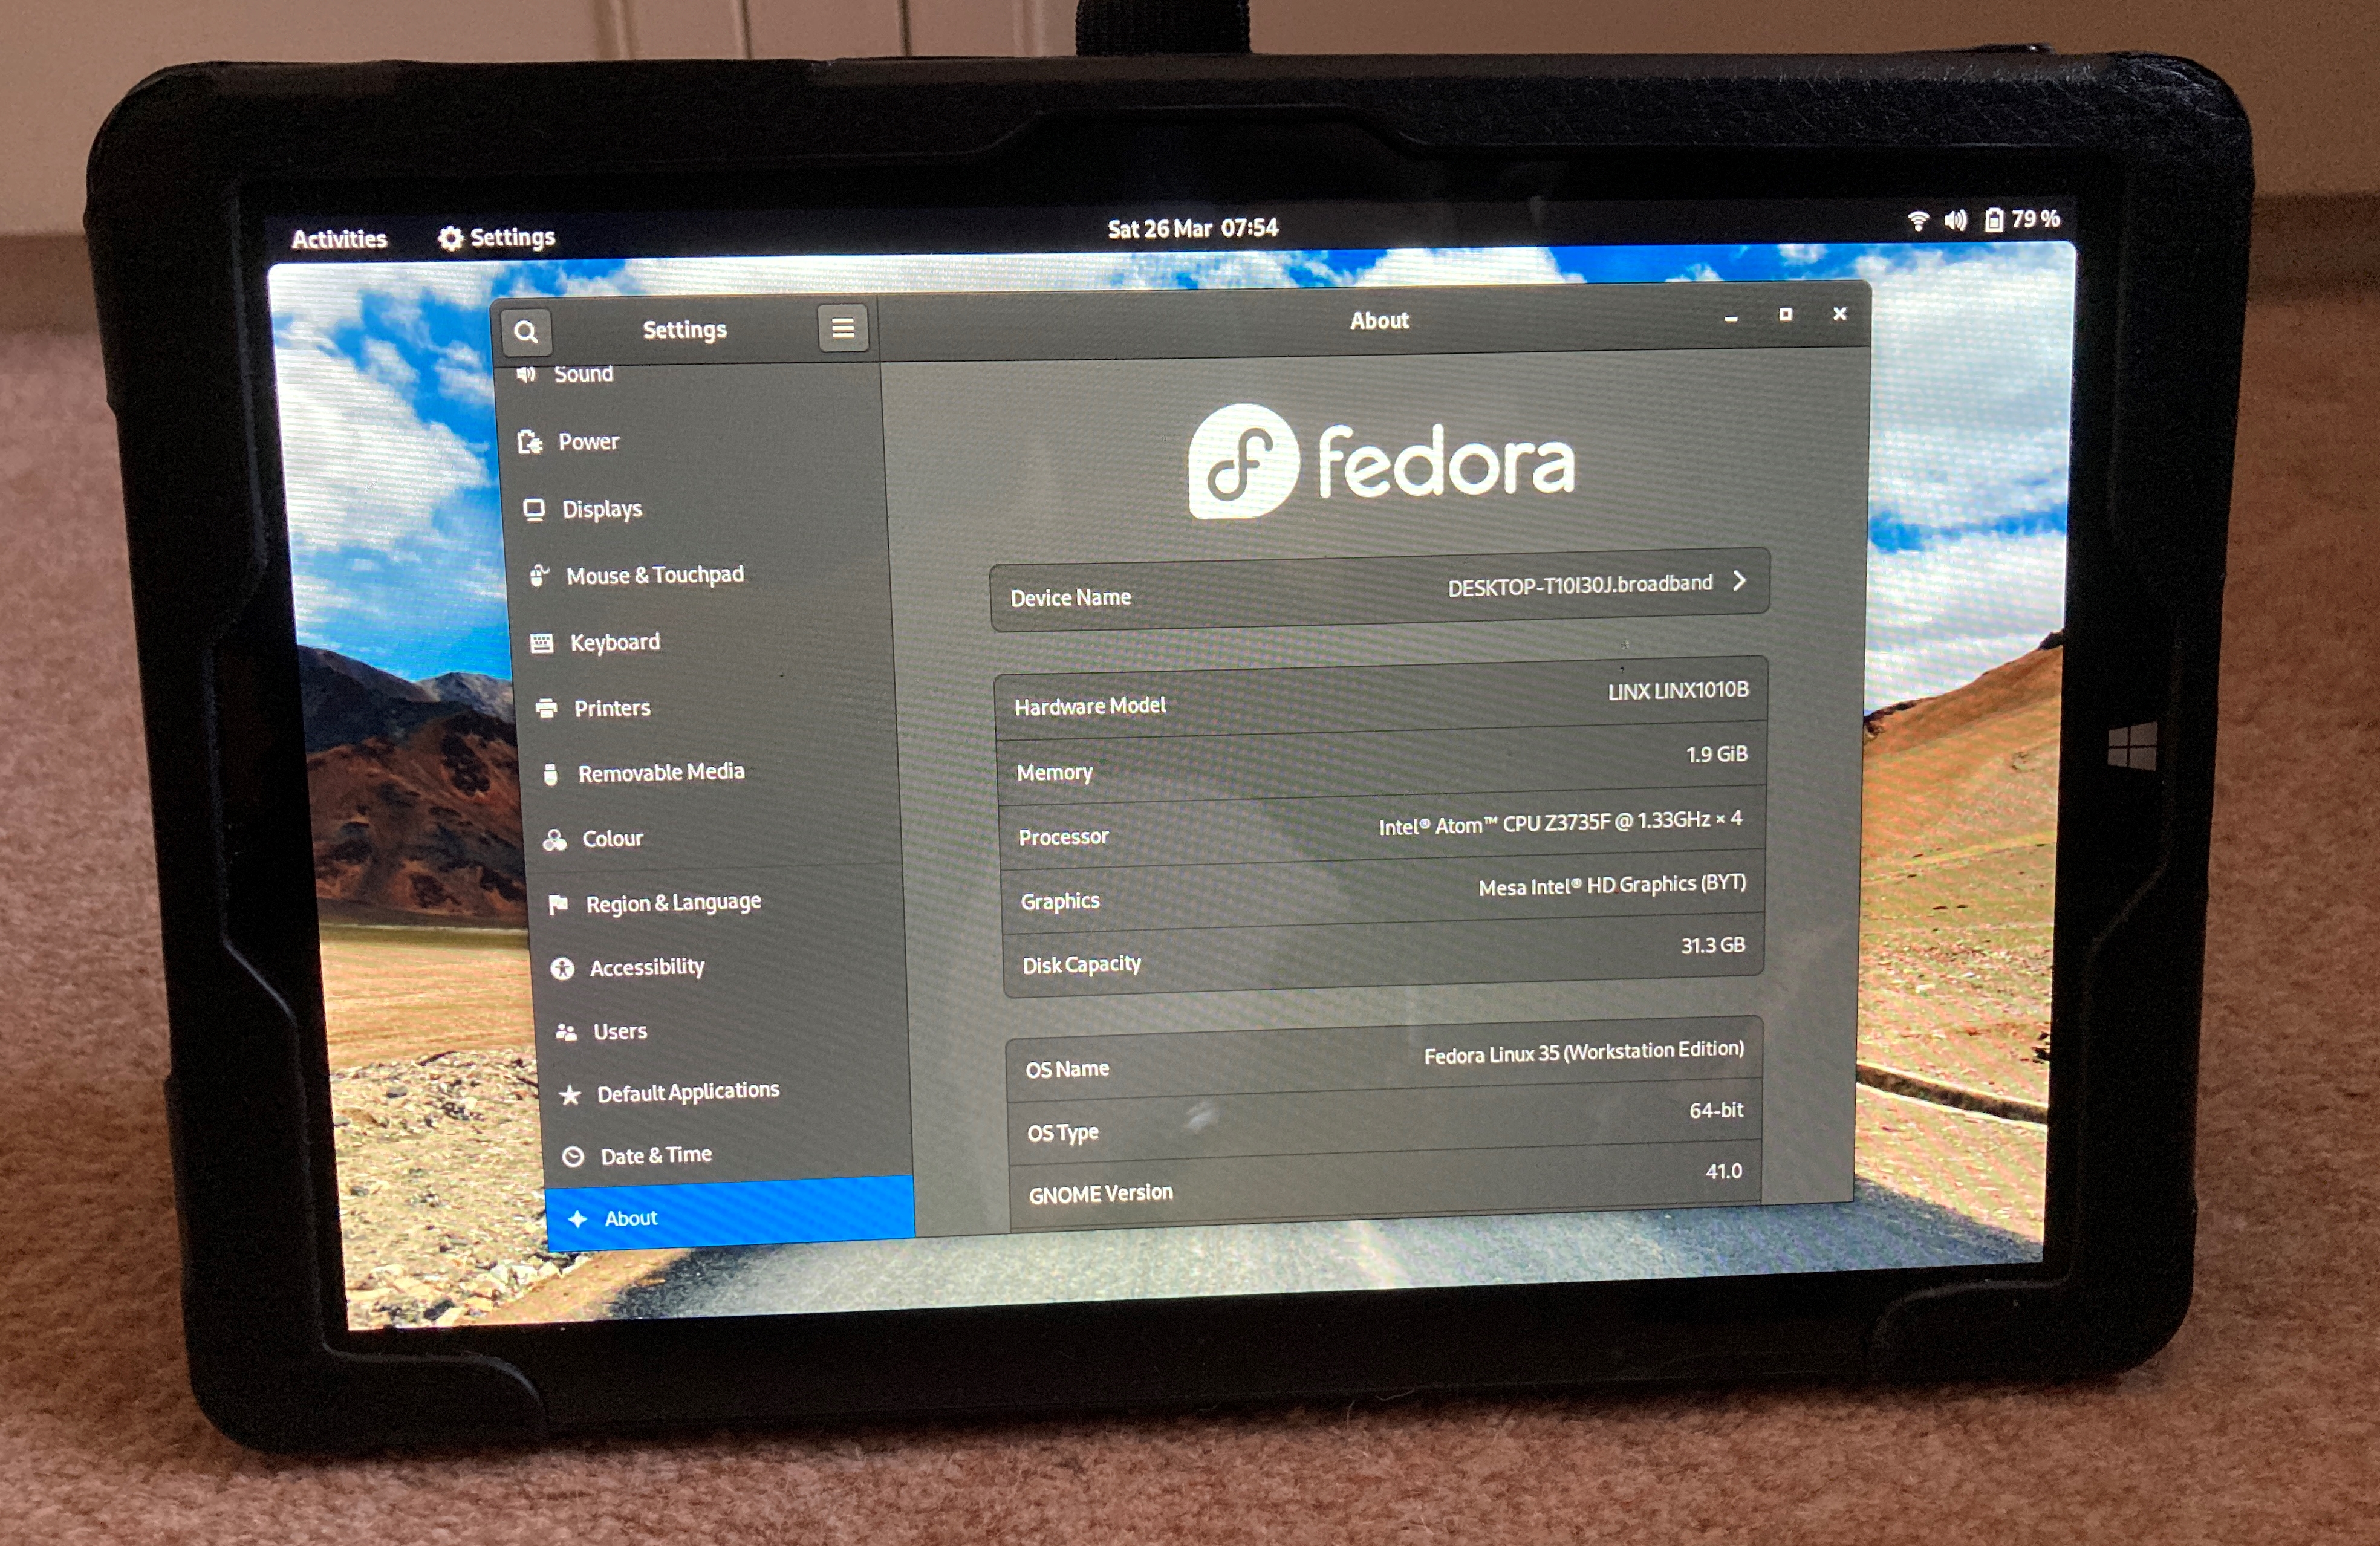 Fedora Workstation on a Linx 1010B tablet